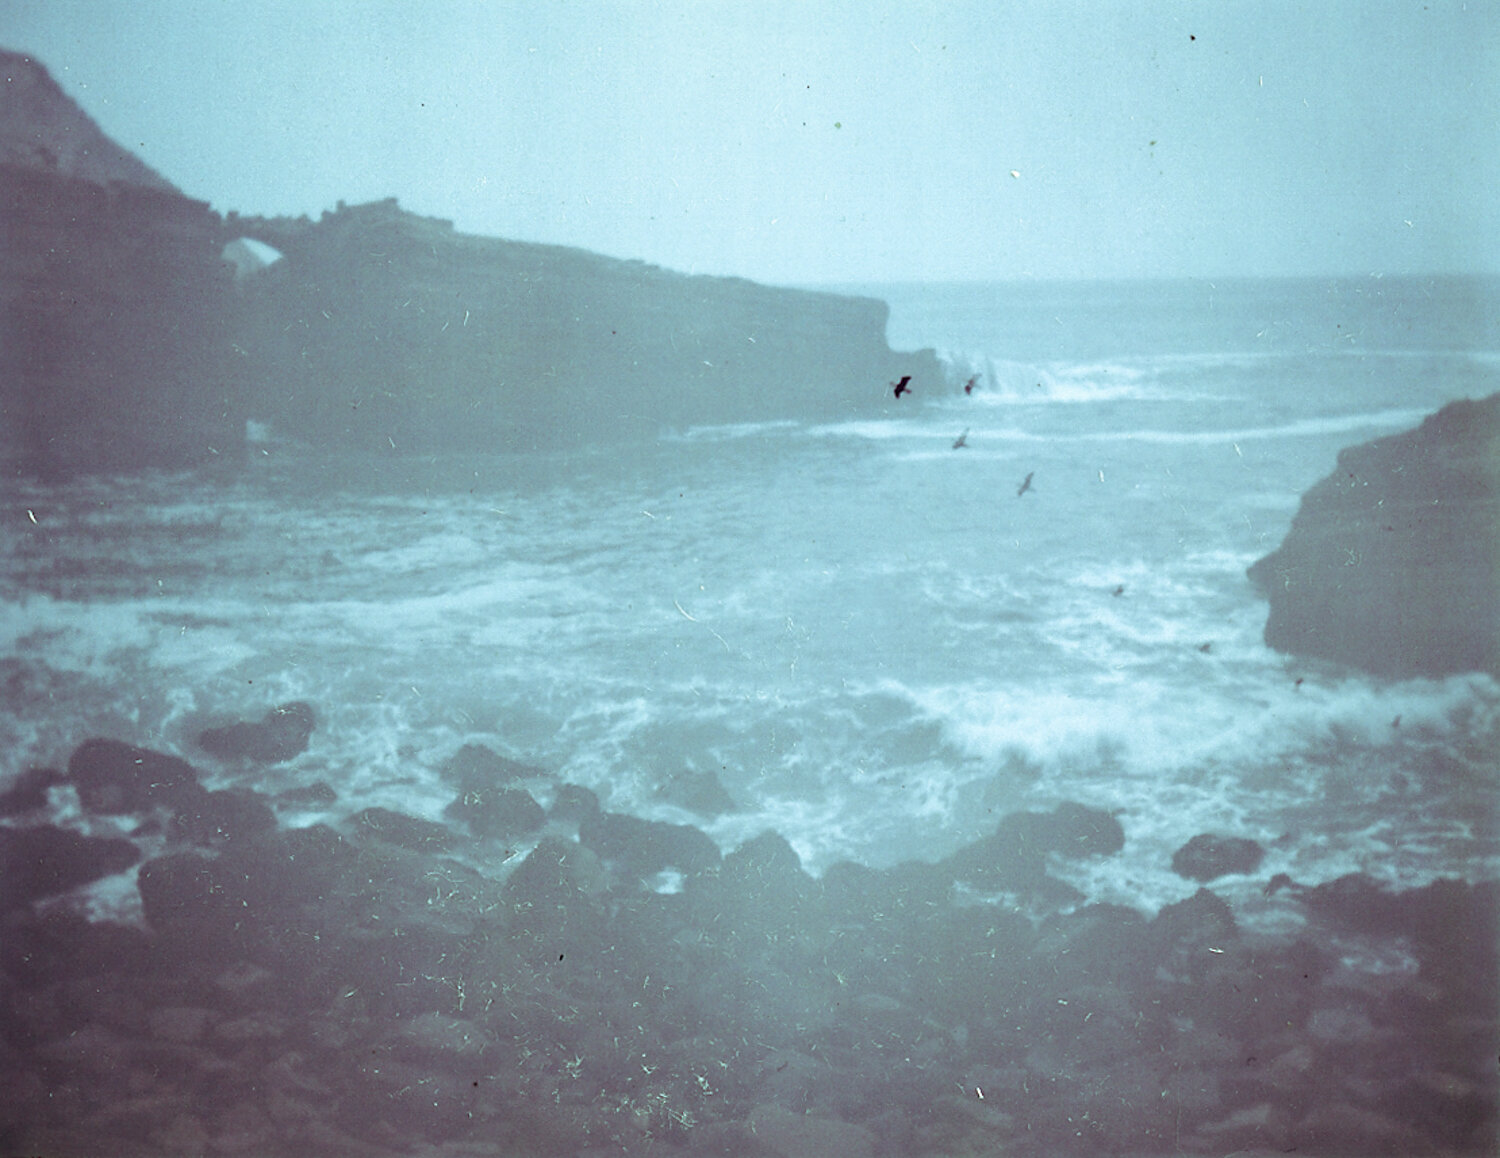 travel peru south america lima cartavio pucallpa chicama desert film analog 35mm lifestyle nature photography photographer krista espino underwater ocean wave surf surfing_-18.jpg